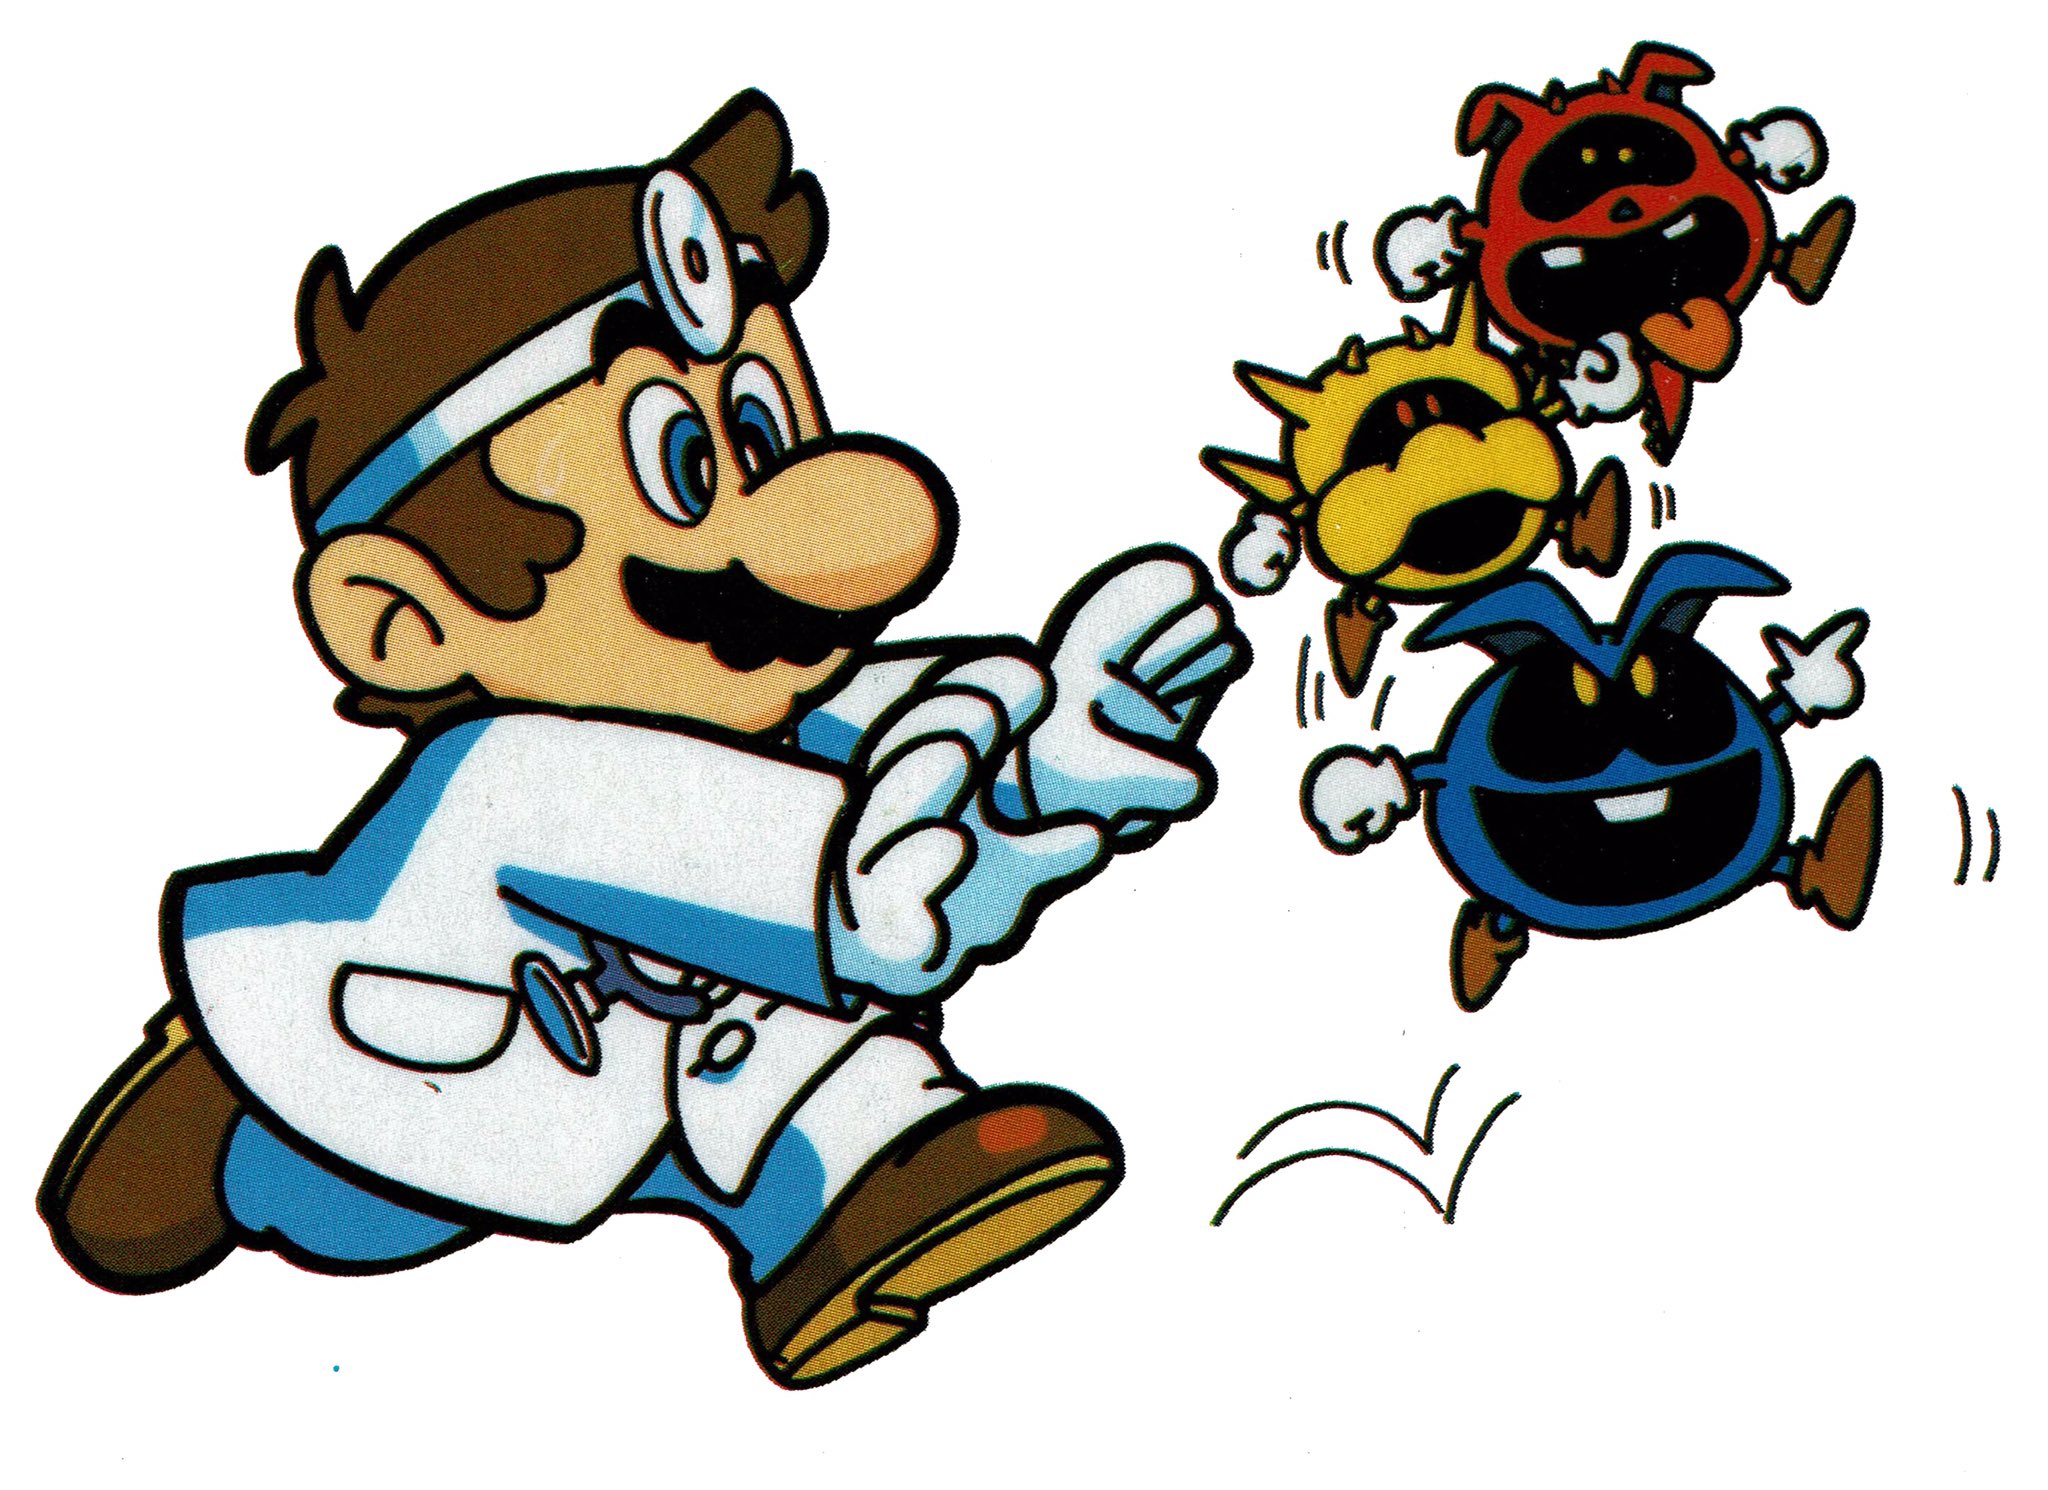 344. Dr. Mario (NES) - promotional artwork. 